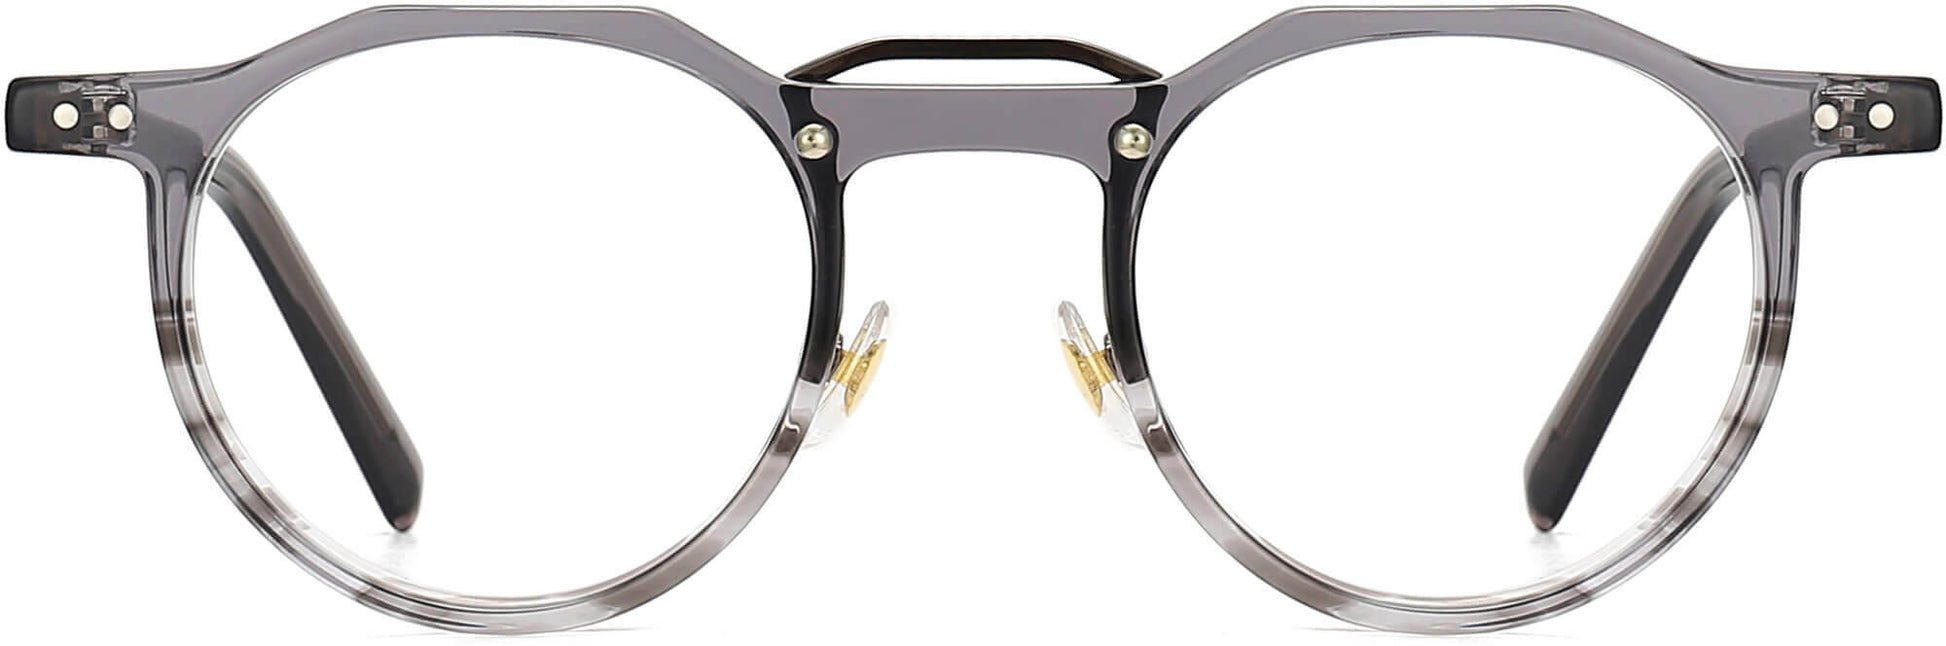 Jaiden Geometric Gray Eyeglasses from ANRRI, front view